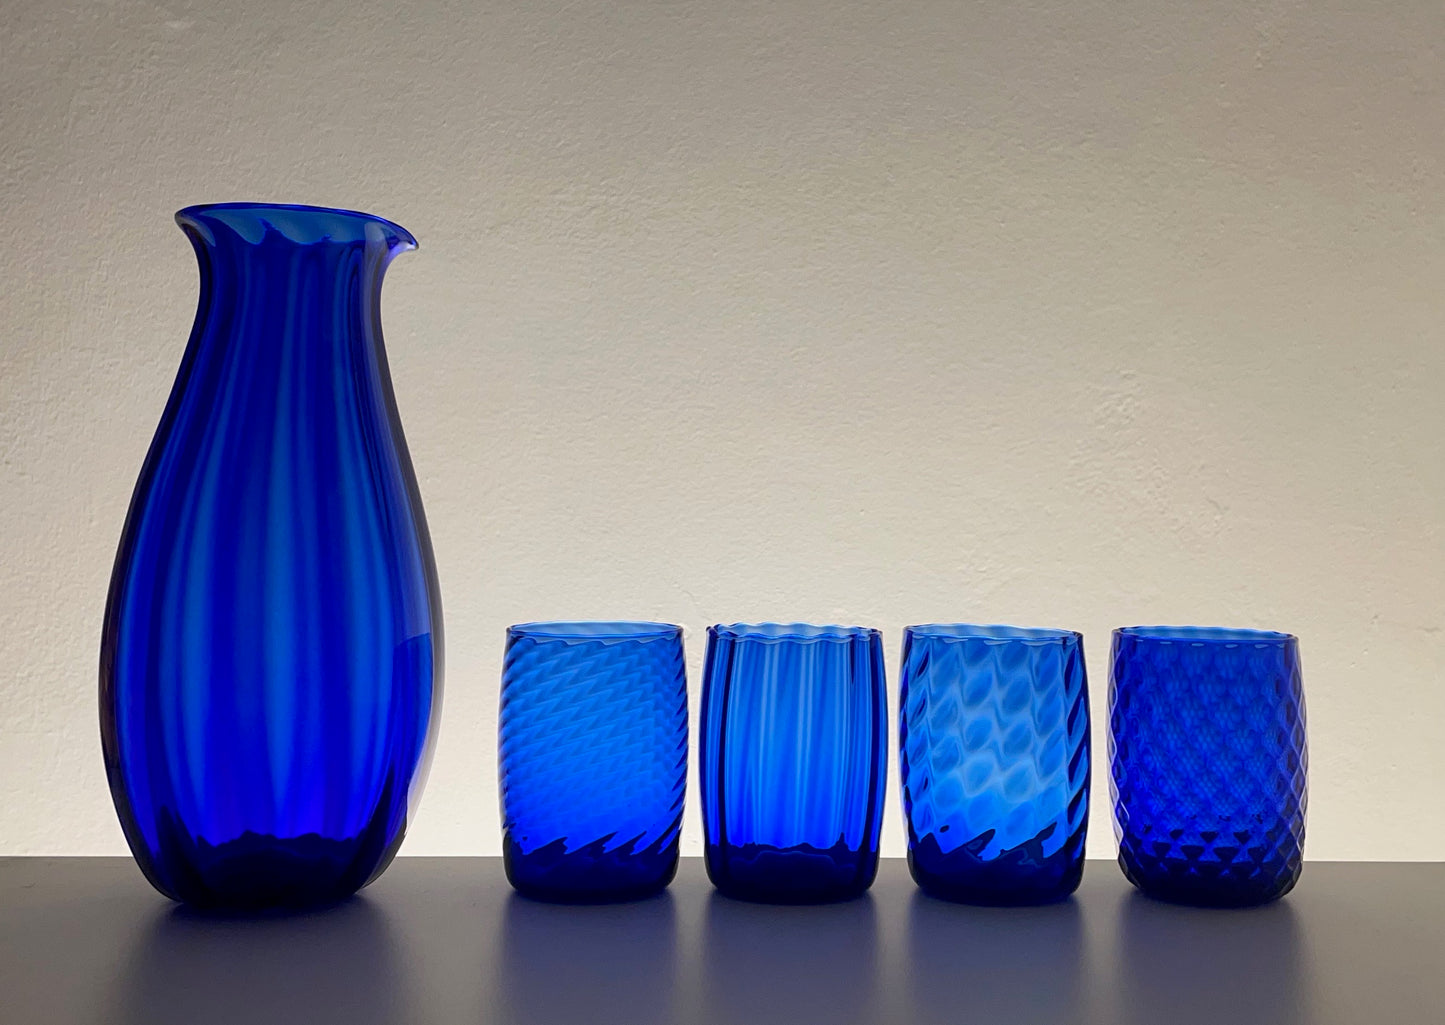 Tumbler set with water jug - Kronenburg blue